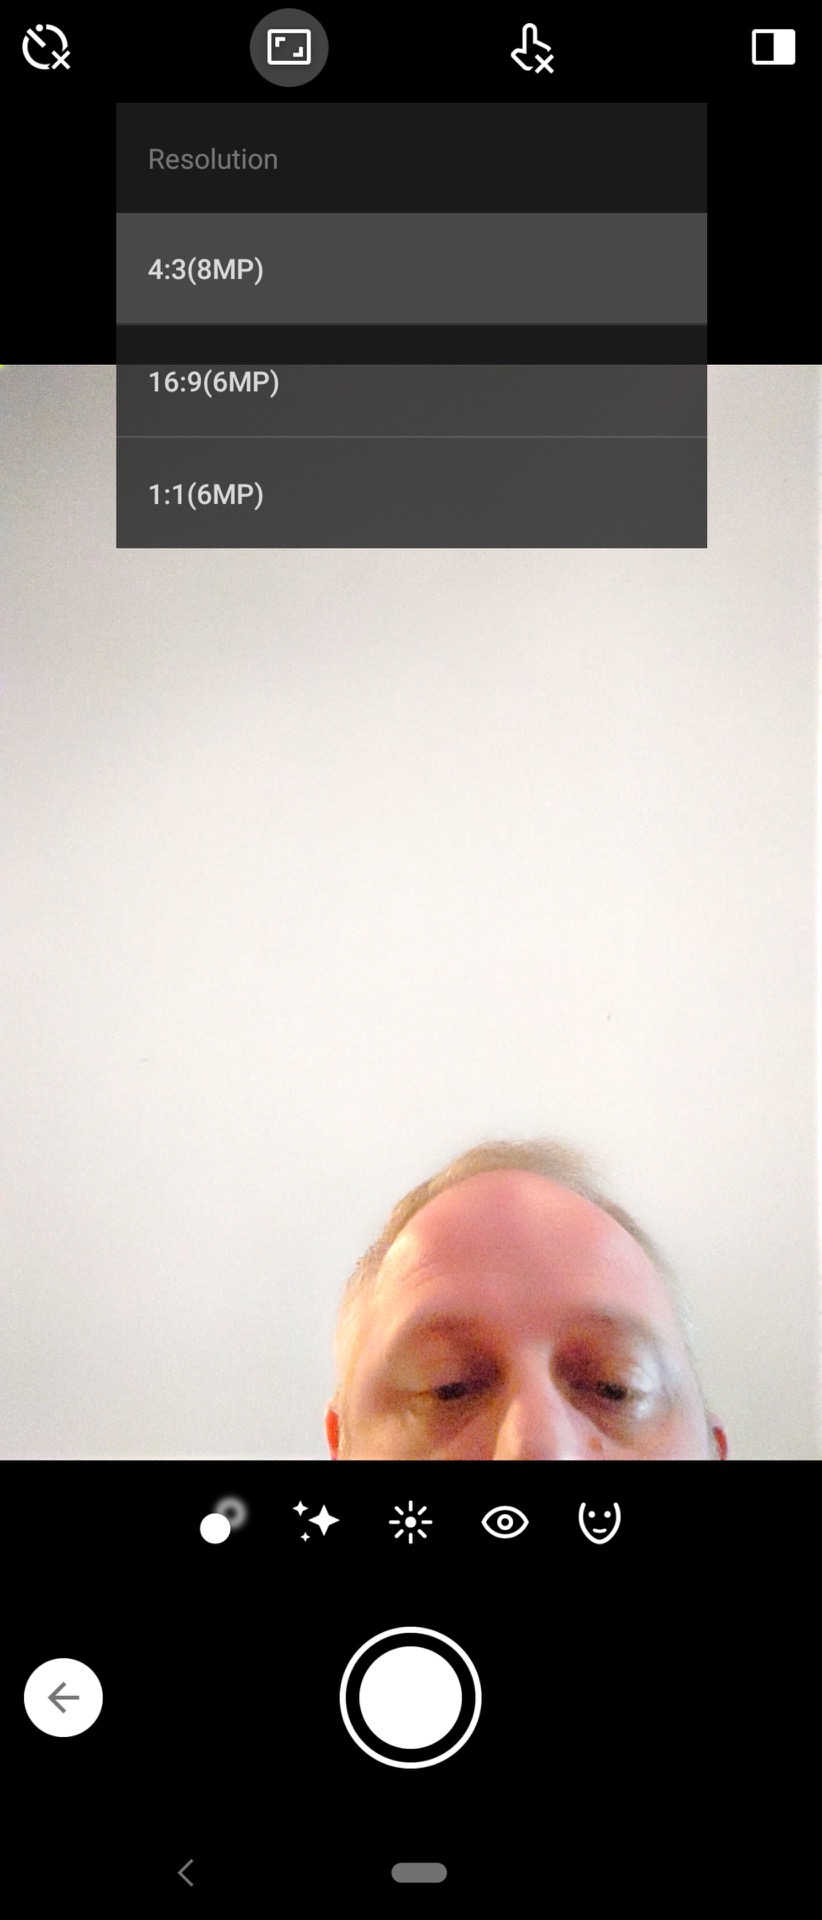 Sony Xperia 1 Review campera app selfie settings